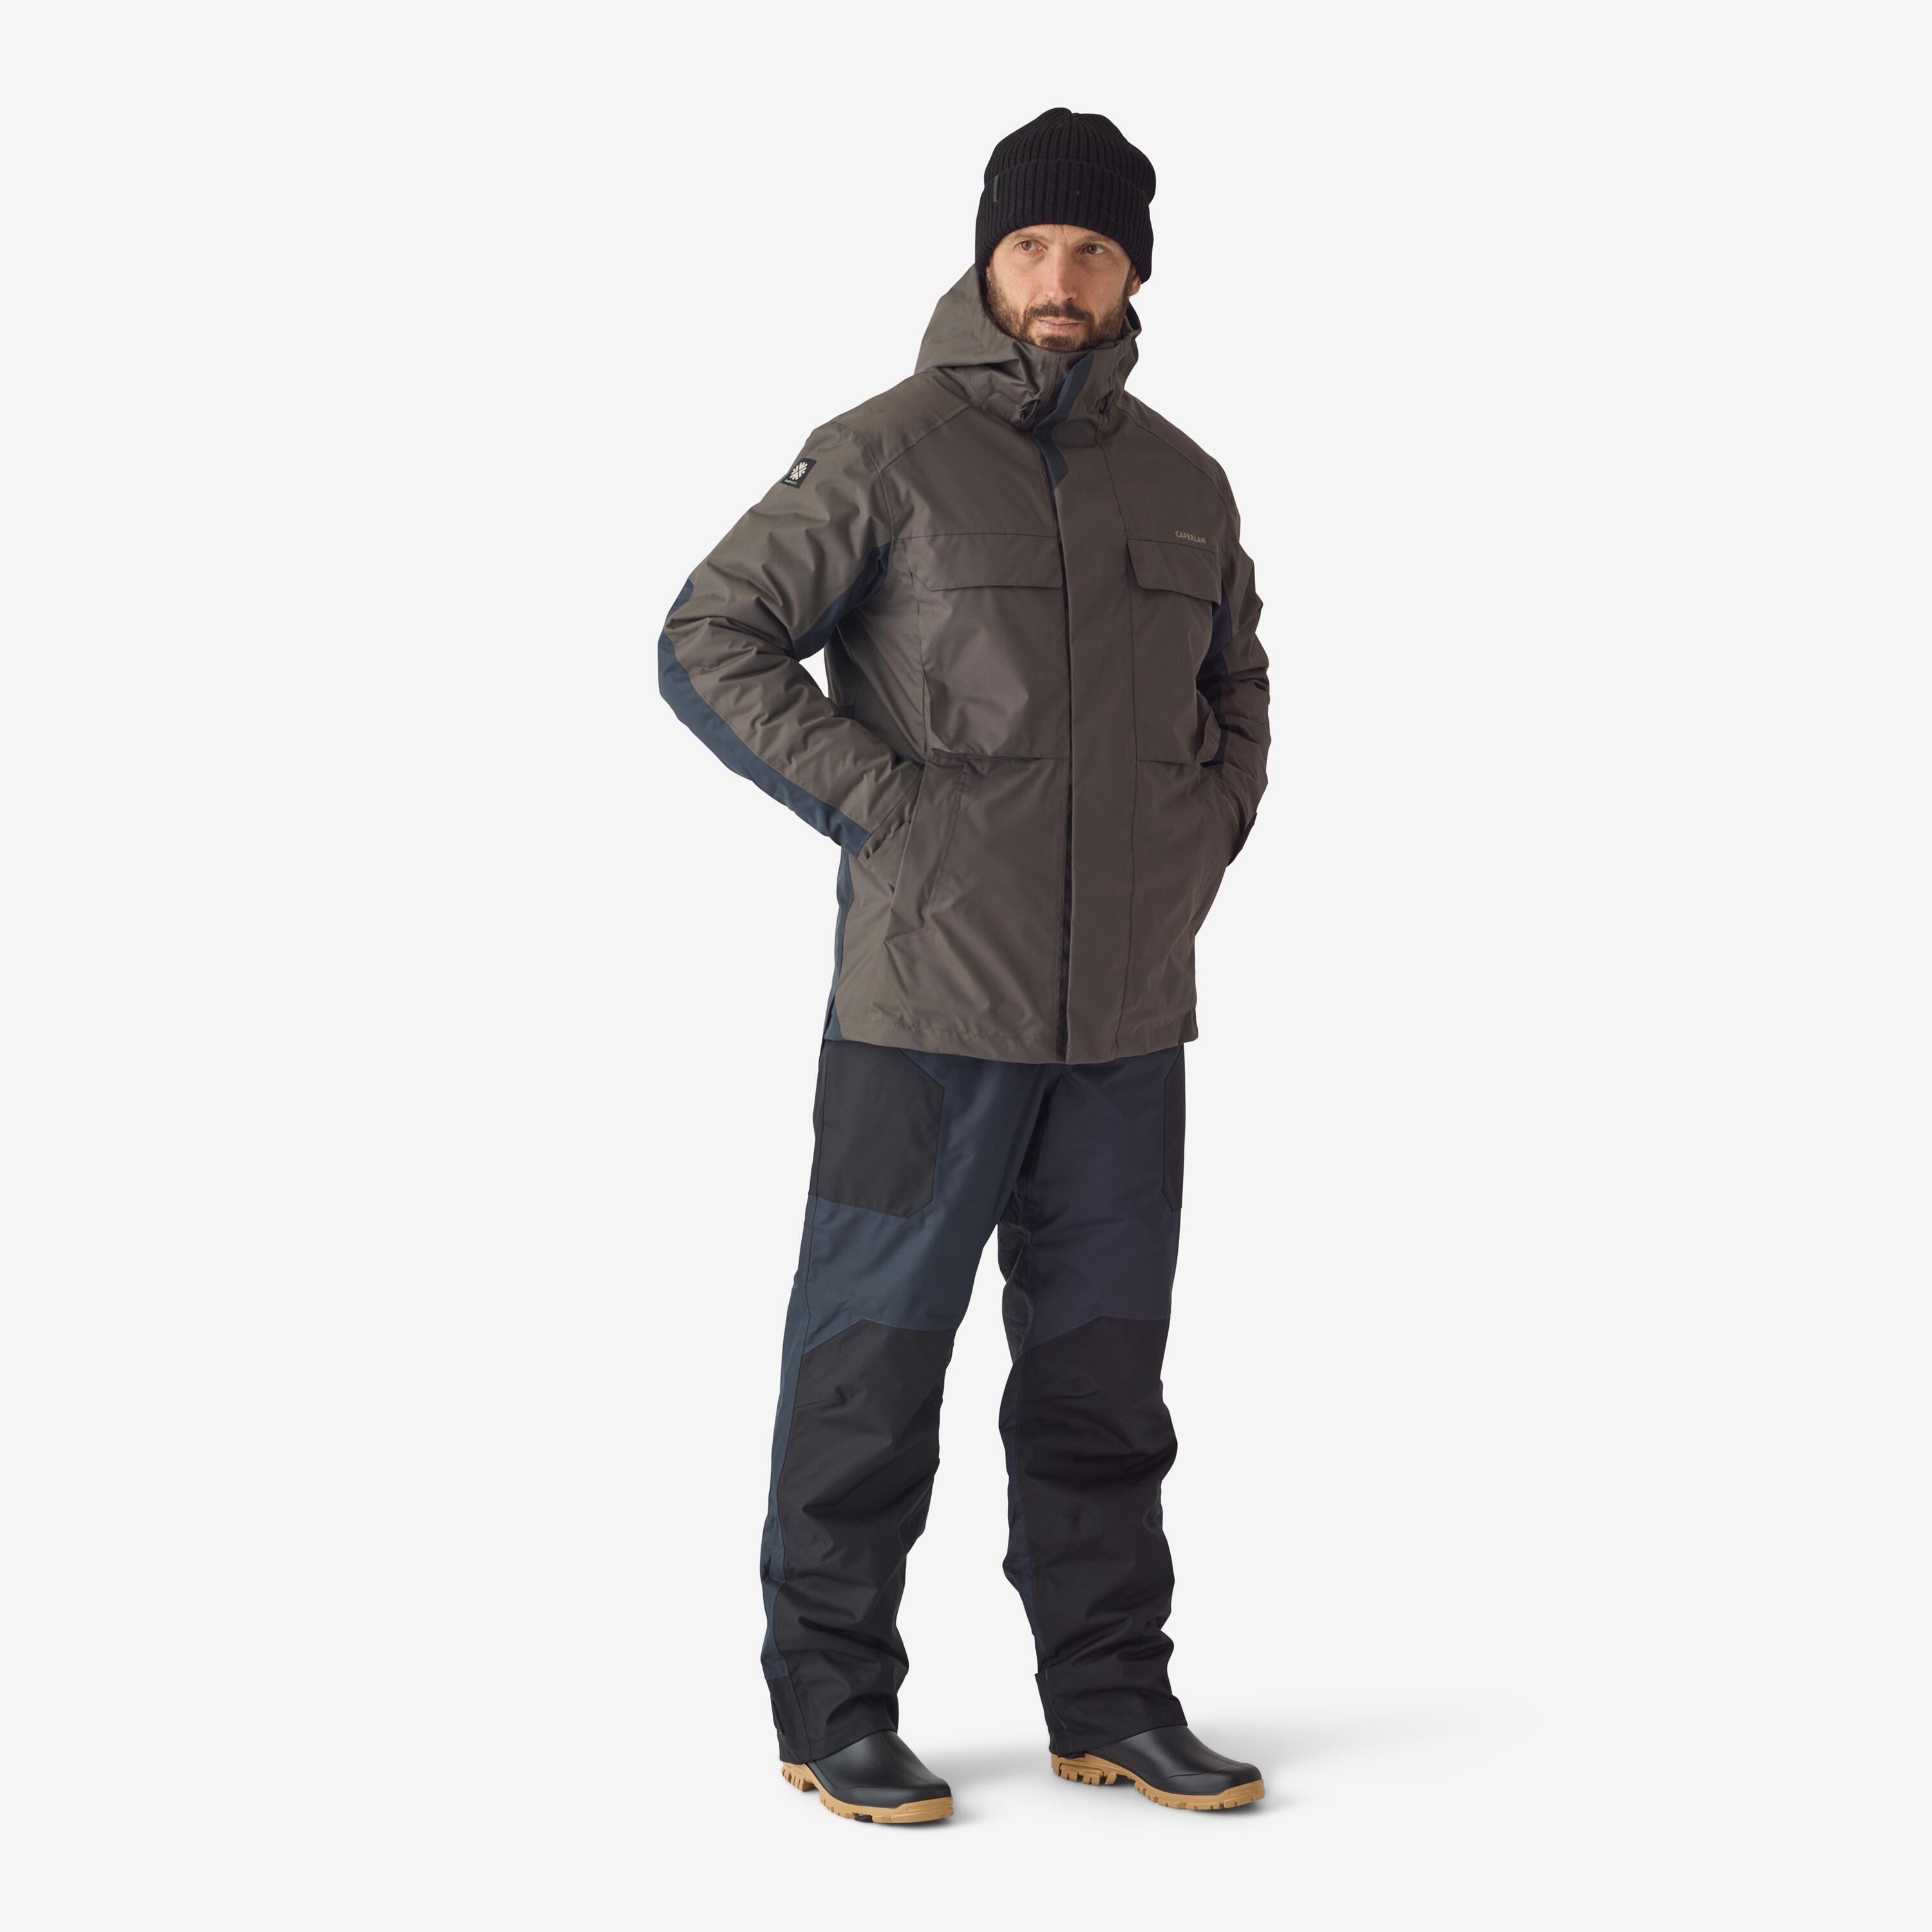 Men's warm waterproof fishing jacket - FJ 500 TH khaki 11/11